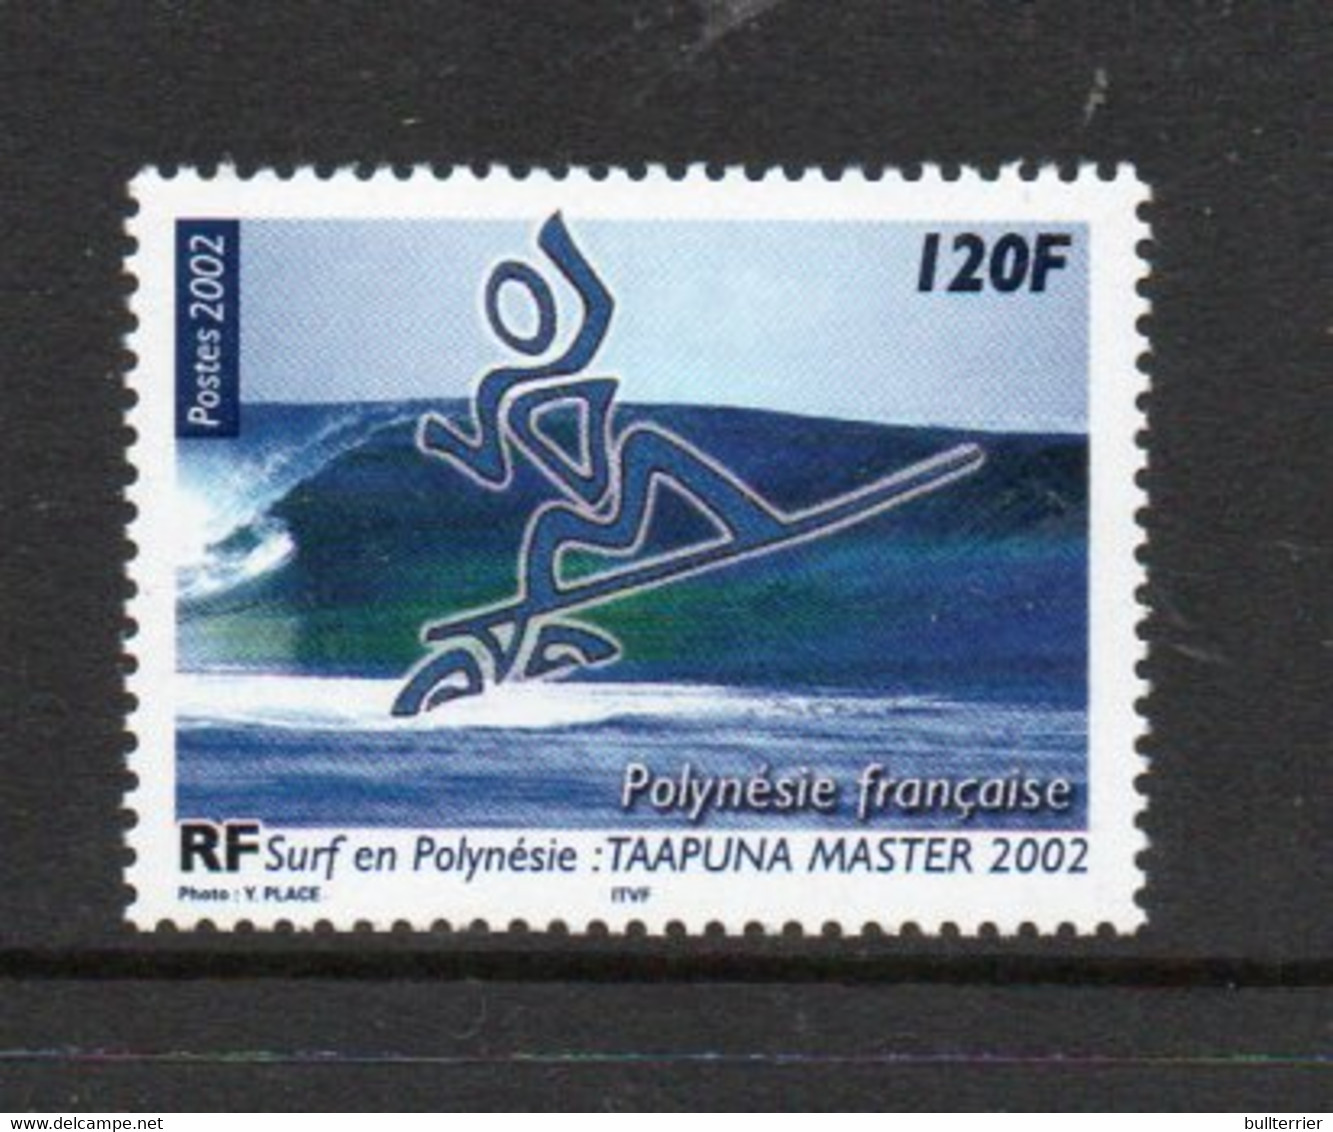 SURFING  - POLYNESIA - 2002 - SURFING  MINT NEVER HINGED - Wasserski